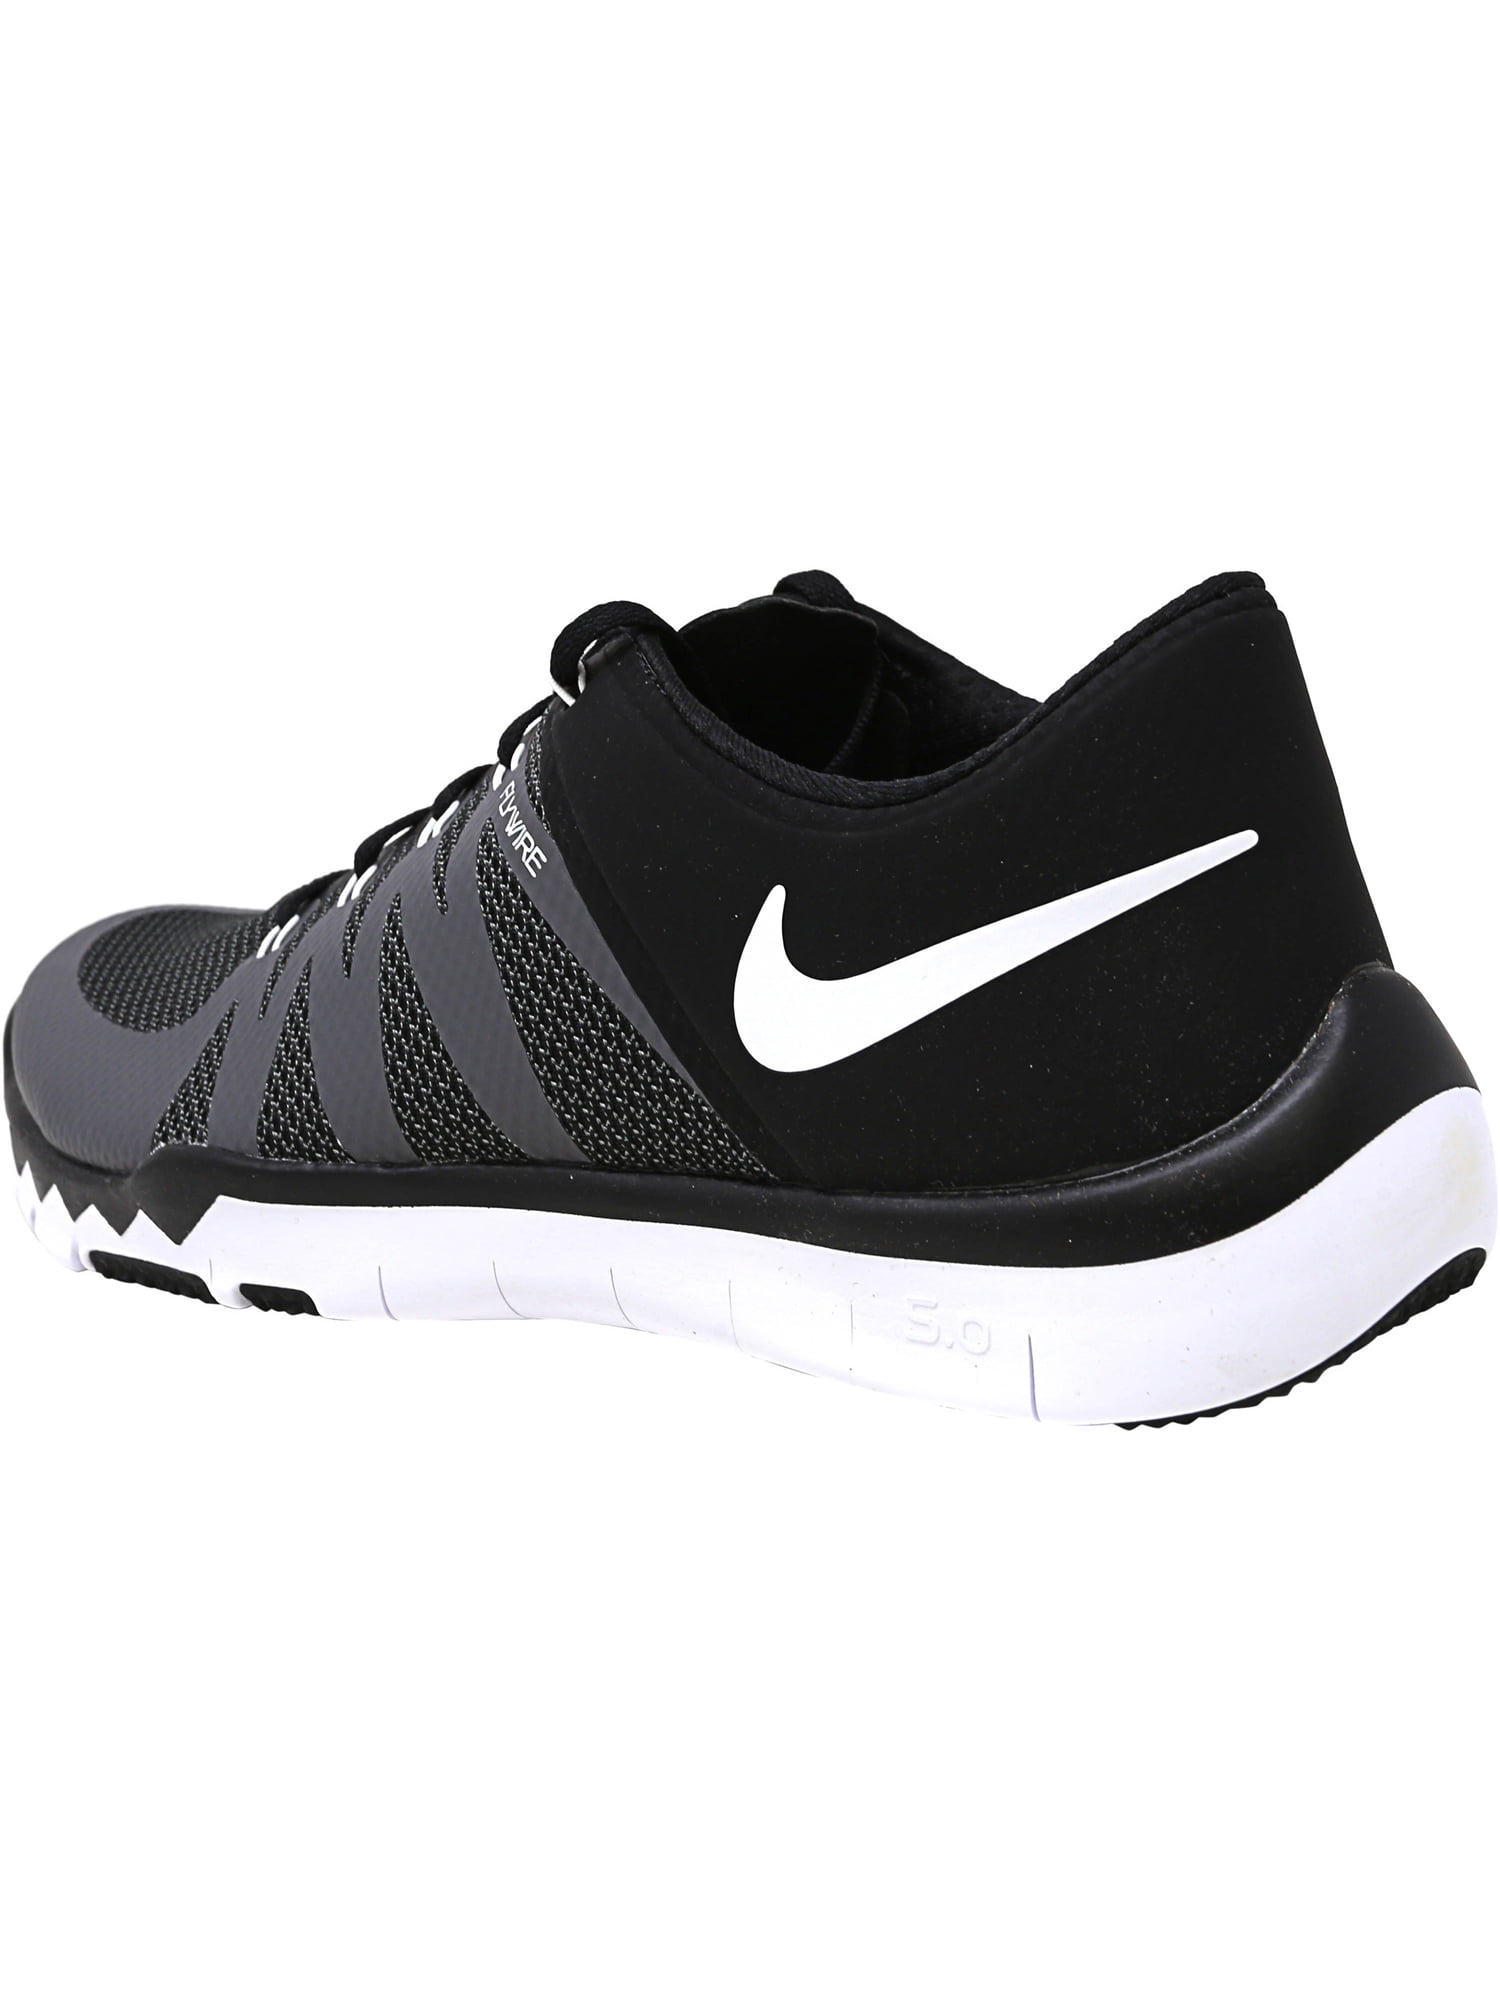 Contract spijsvertering Vakantie Nike Men's Free Trainer 5.0 V6 Game Royal / Volt - Obsidian Ankle-High Cross  Shoe 13M - Walmart.com